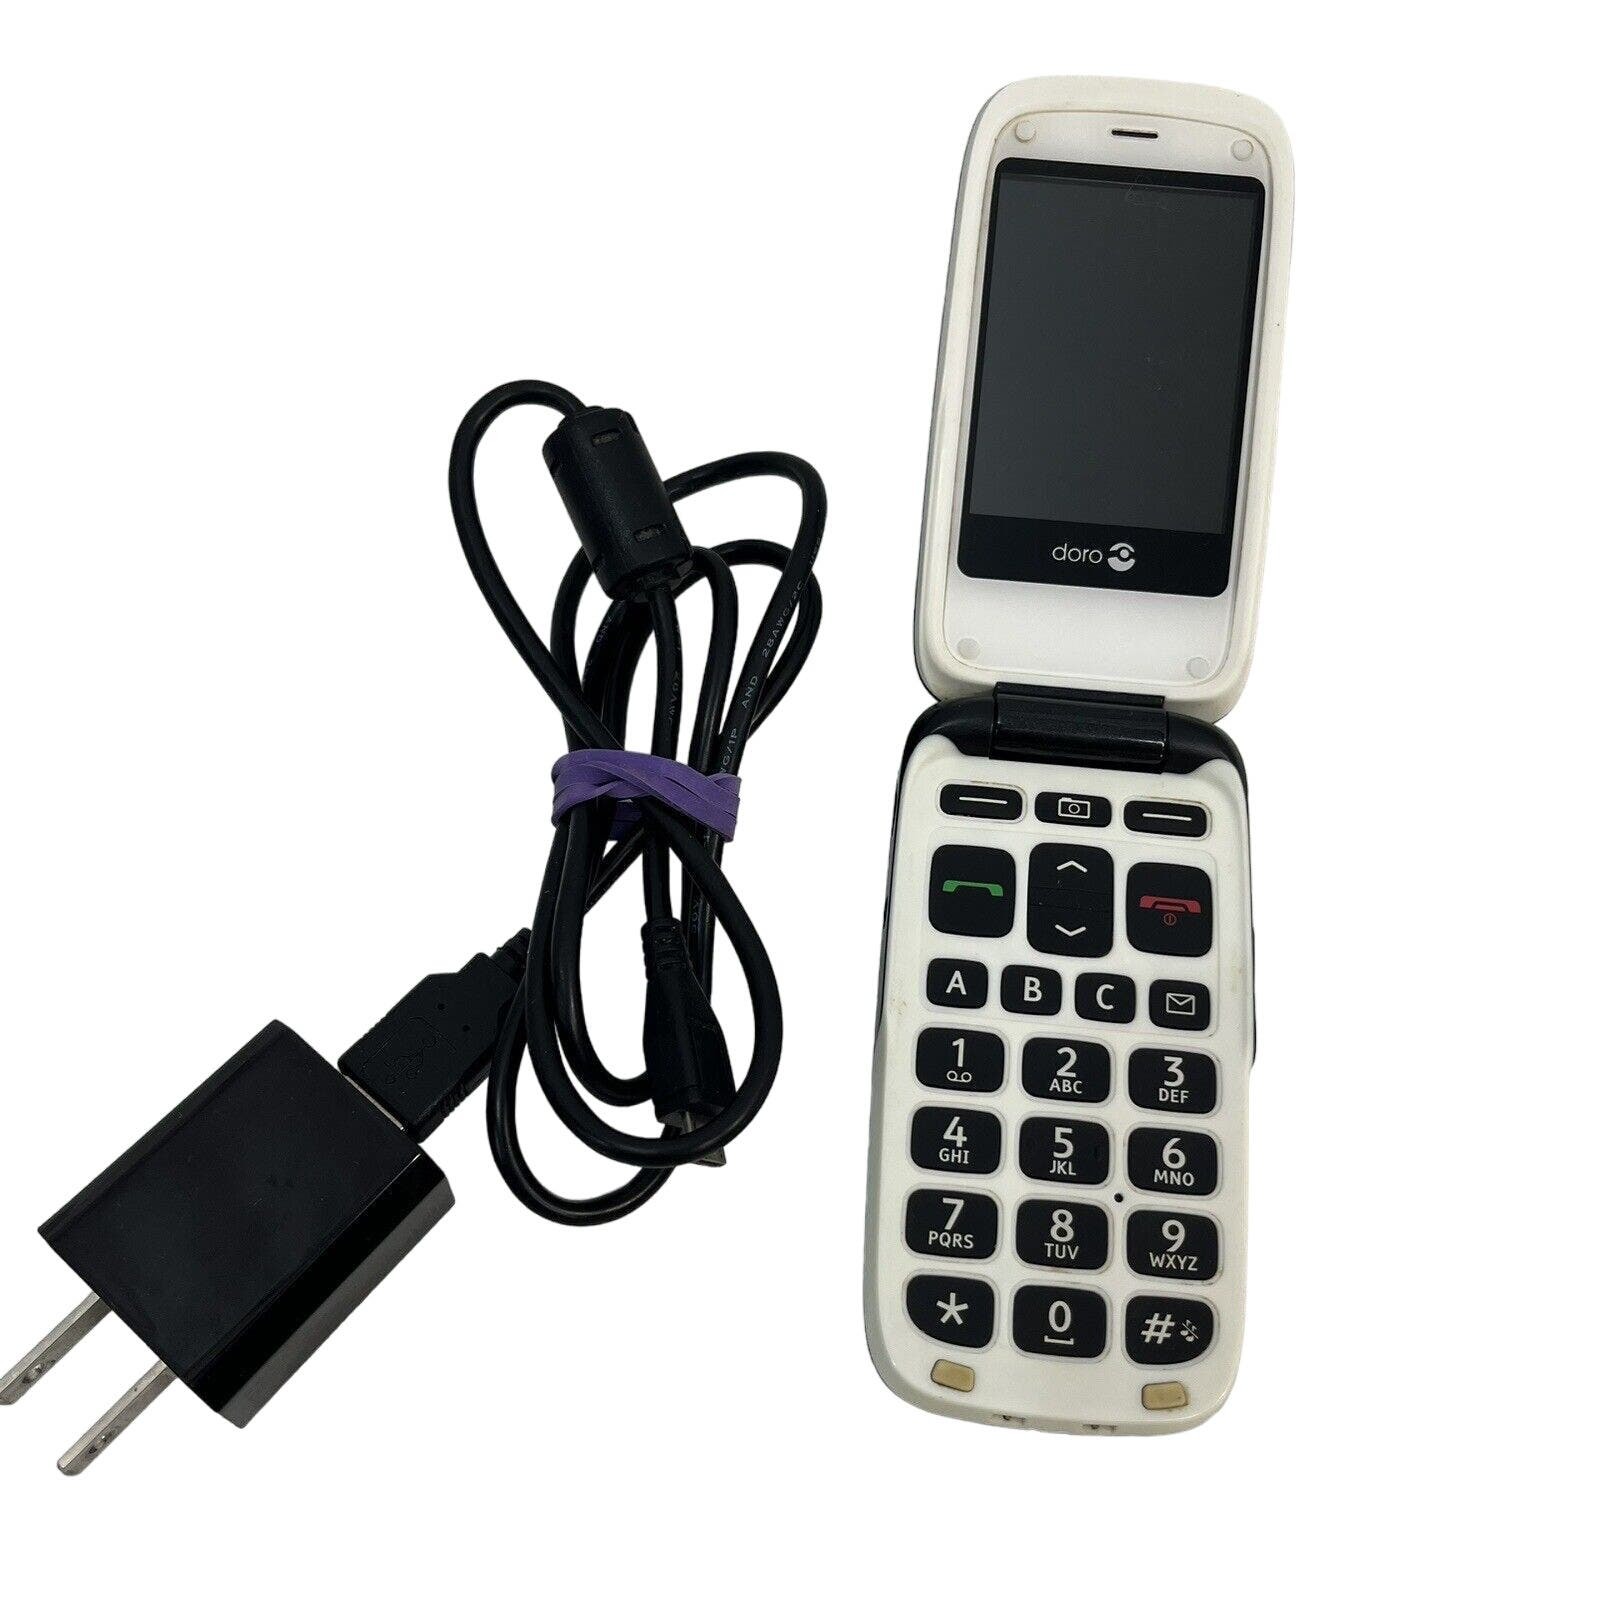 Doro PhoneEasy 618 Camera SENIOR 3G GSM Flip CONSUMER CELLULAR Cell Phone Parts - $8.95